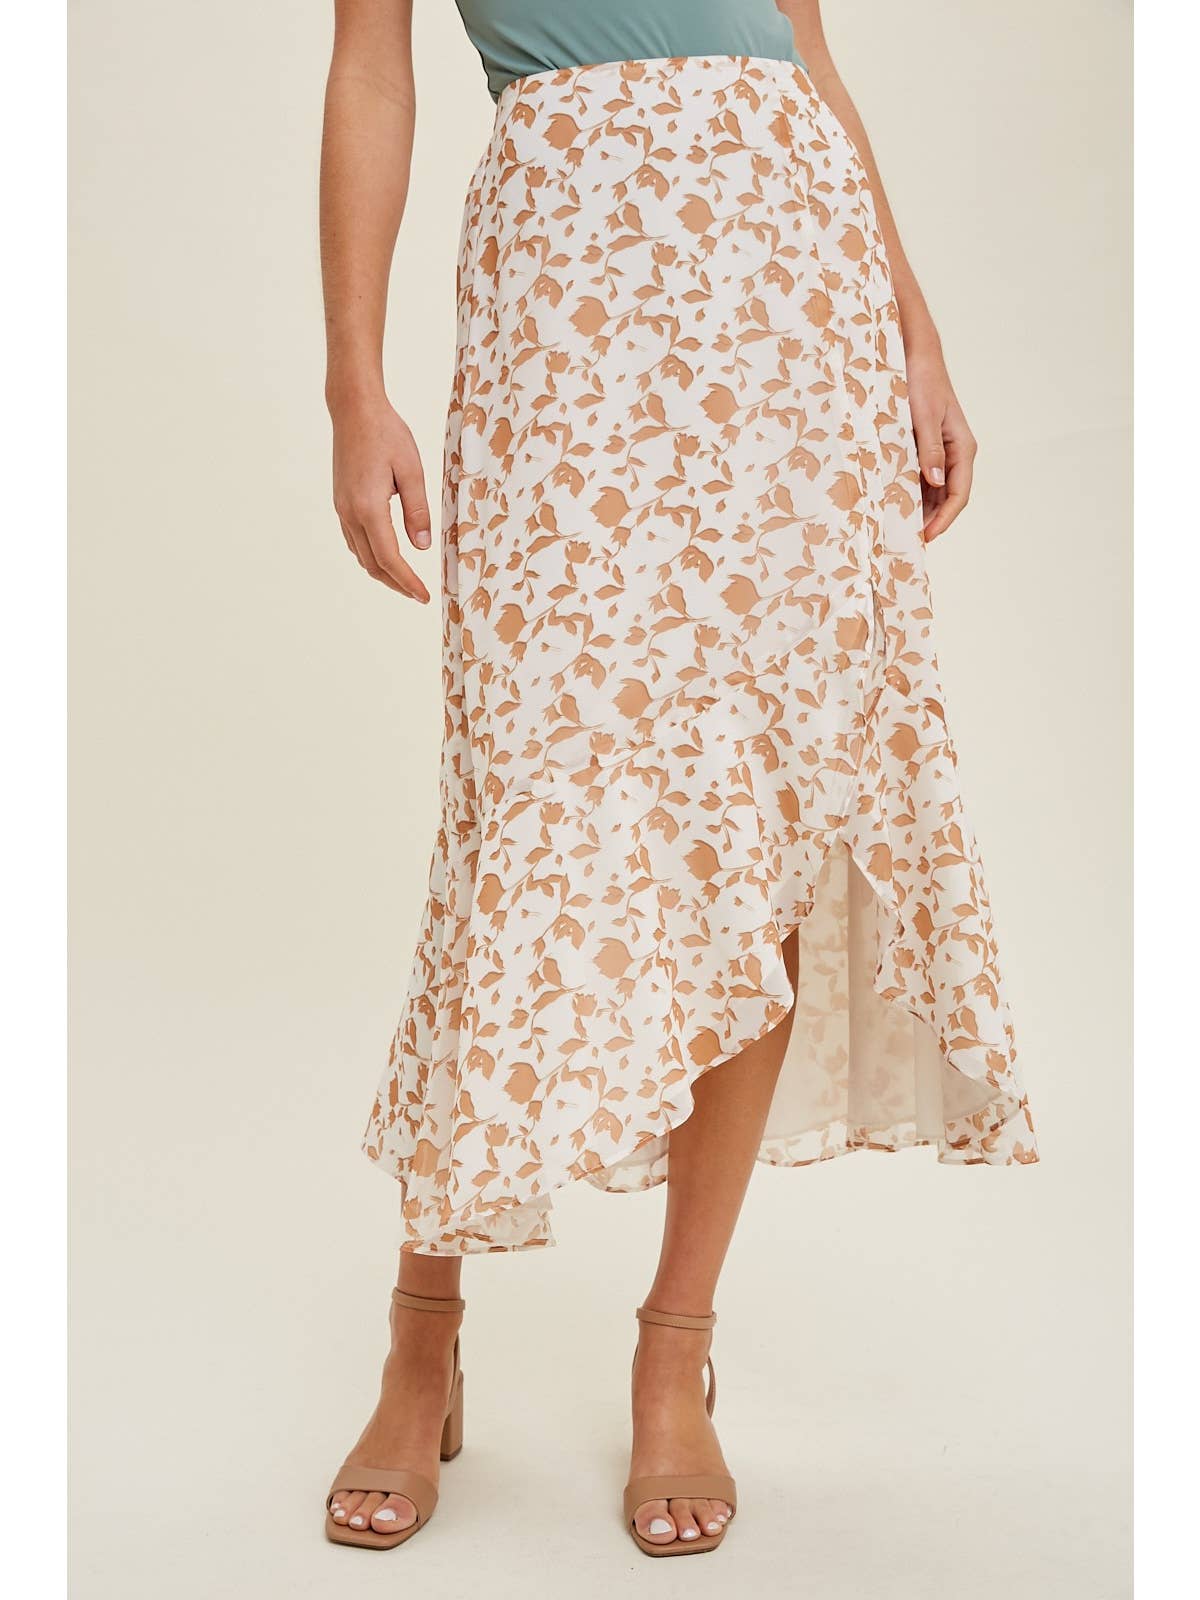 Floral Print Asymmetrical Skirt with Ruffle Hem